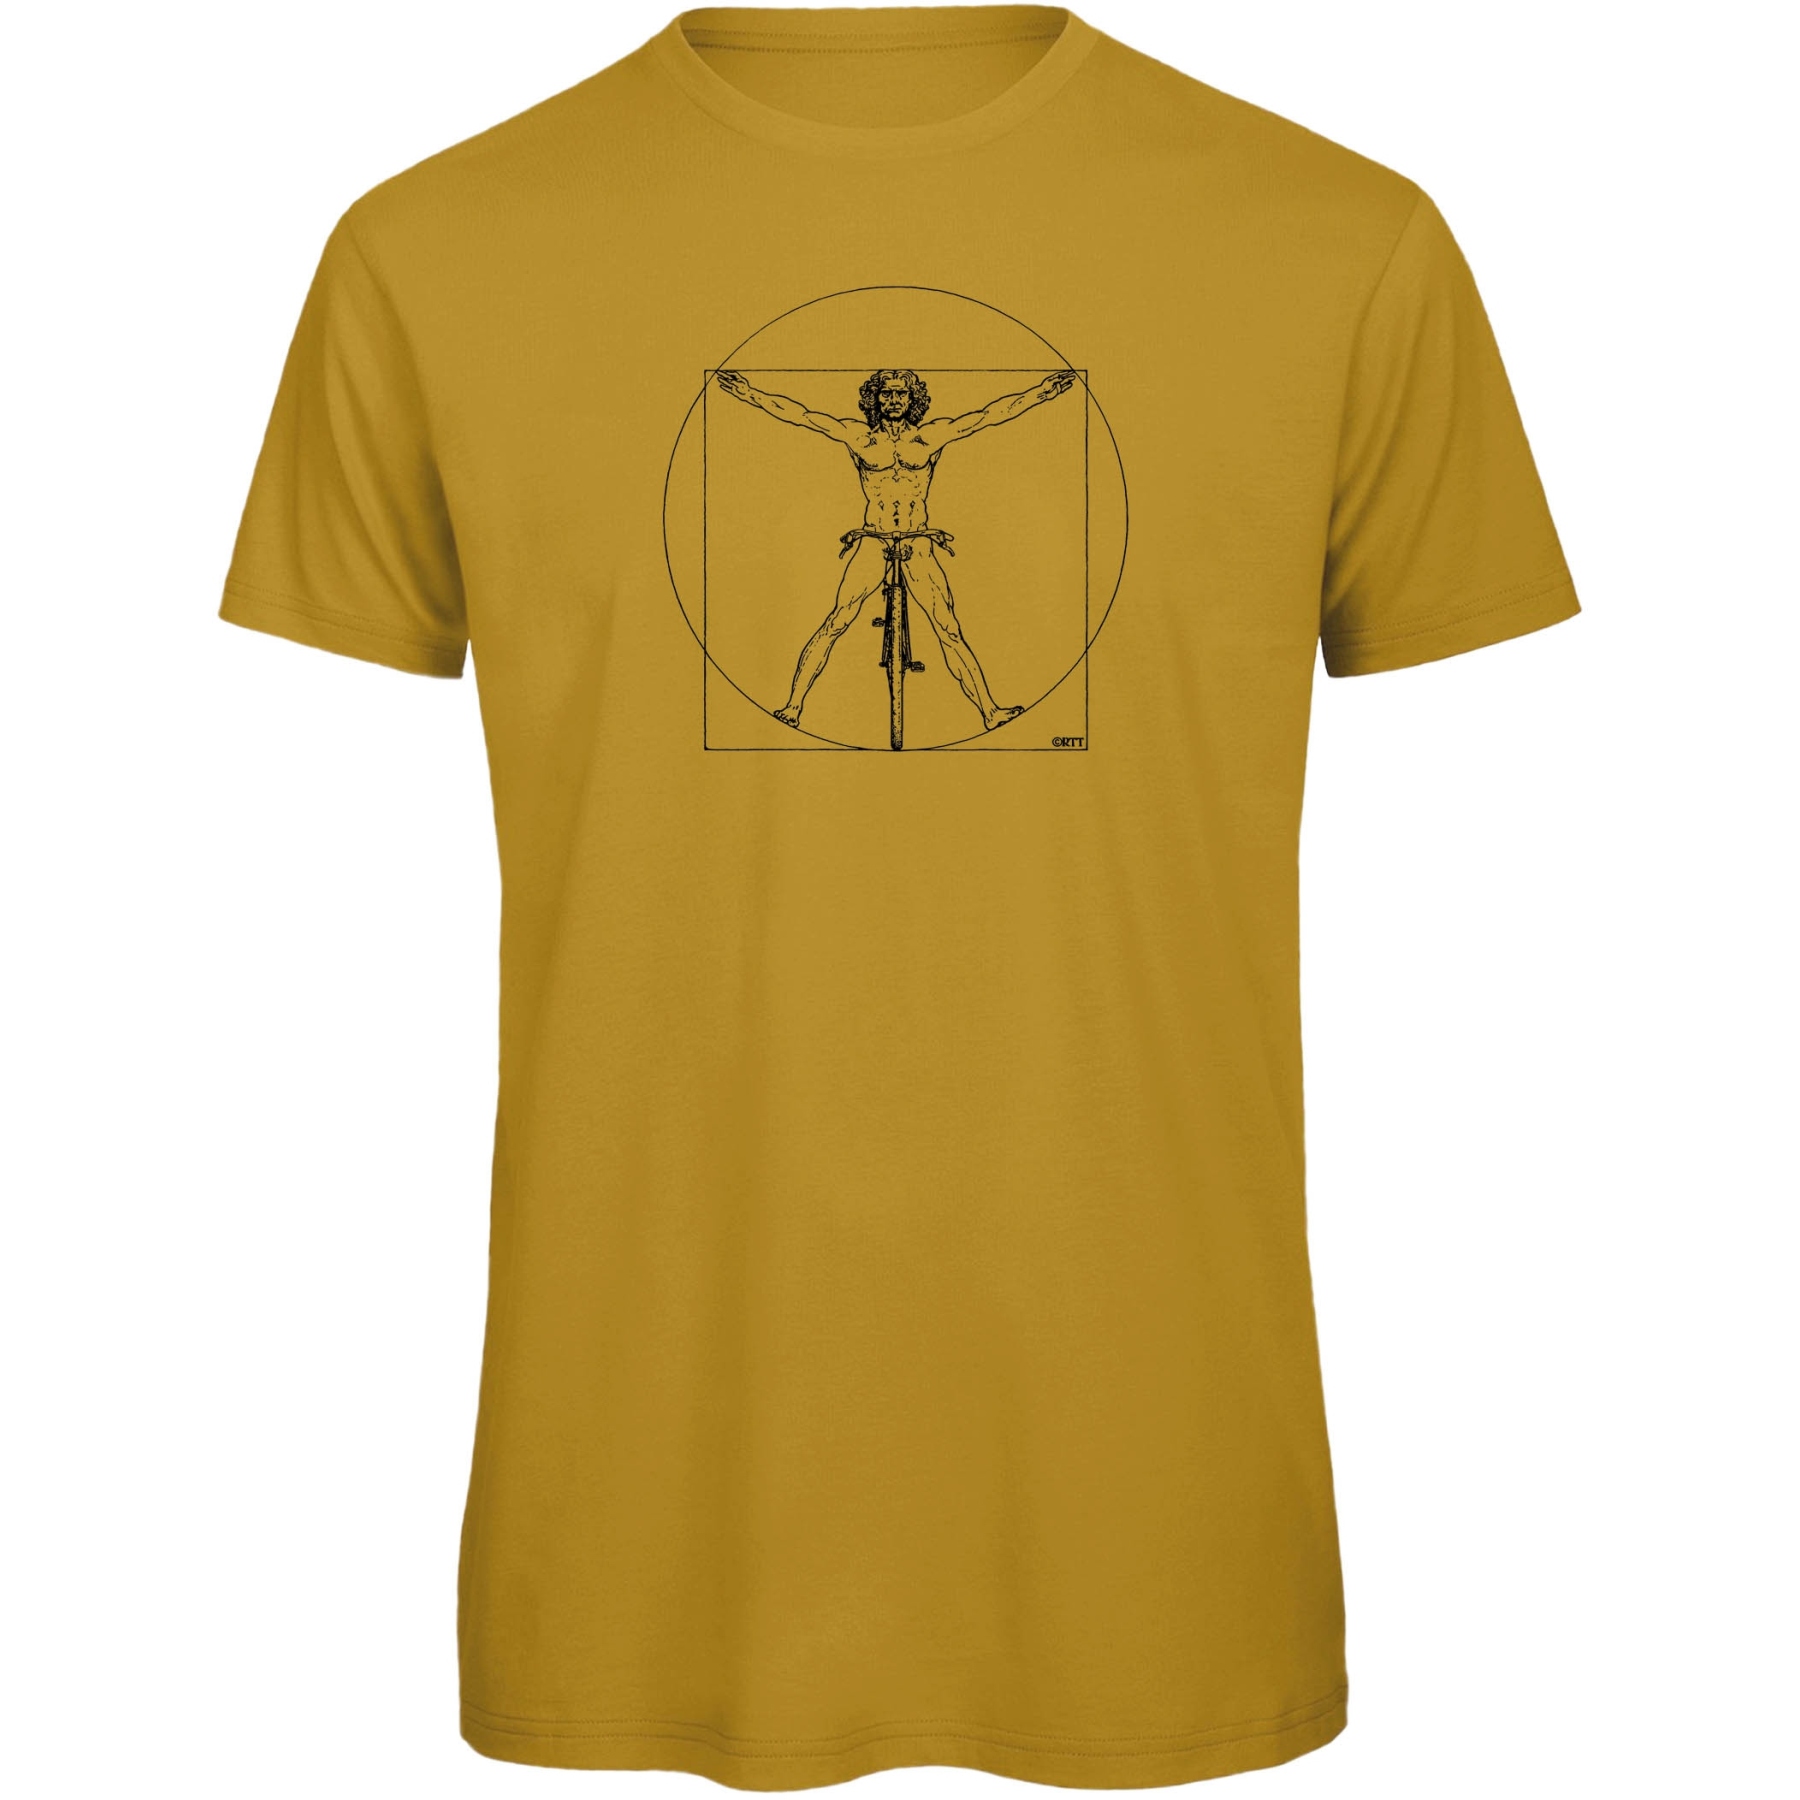 Imagen de RTTshirts Camiseta Bicicleta - DaVinci - ocre